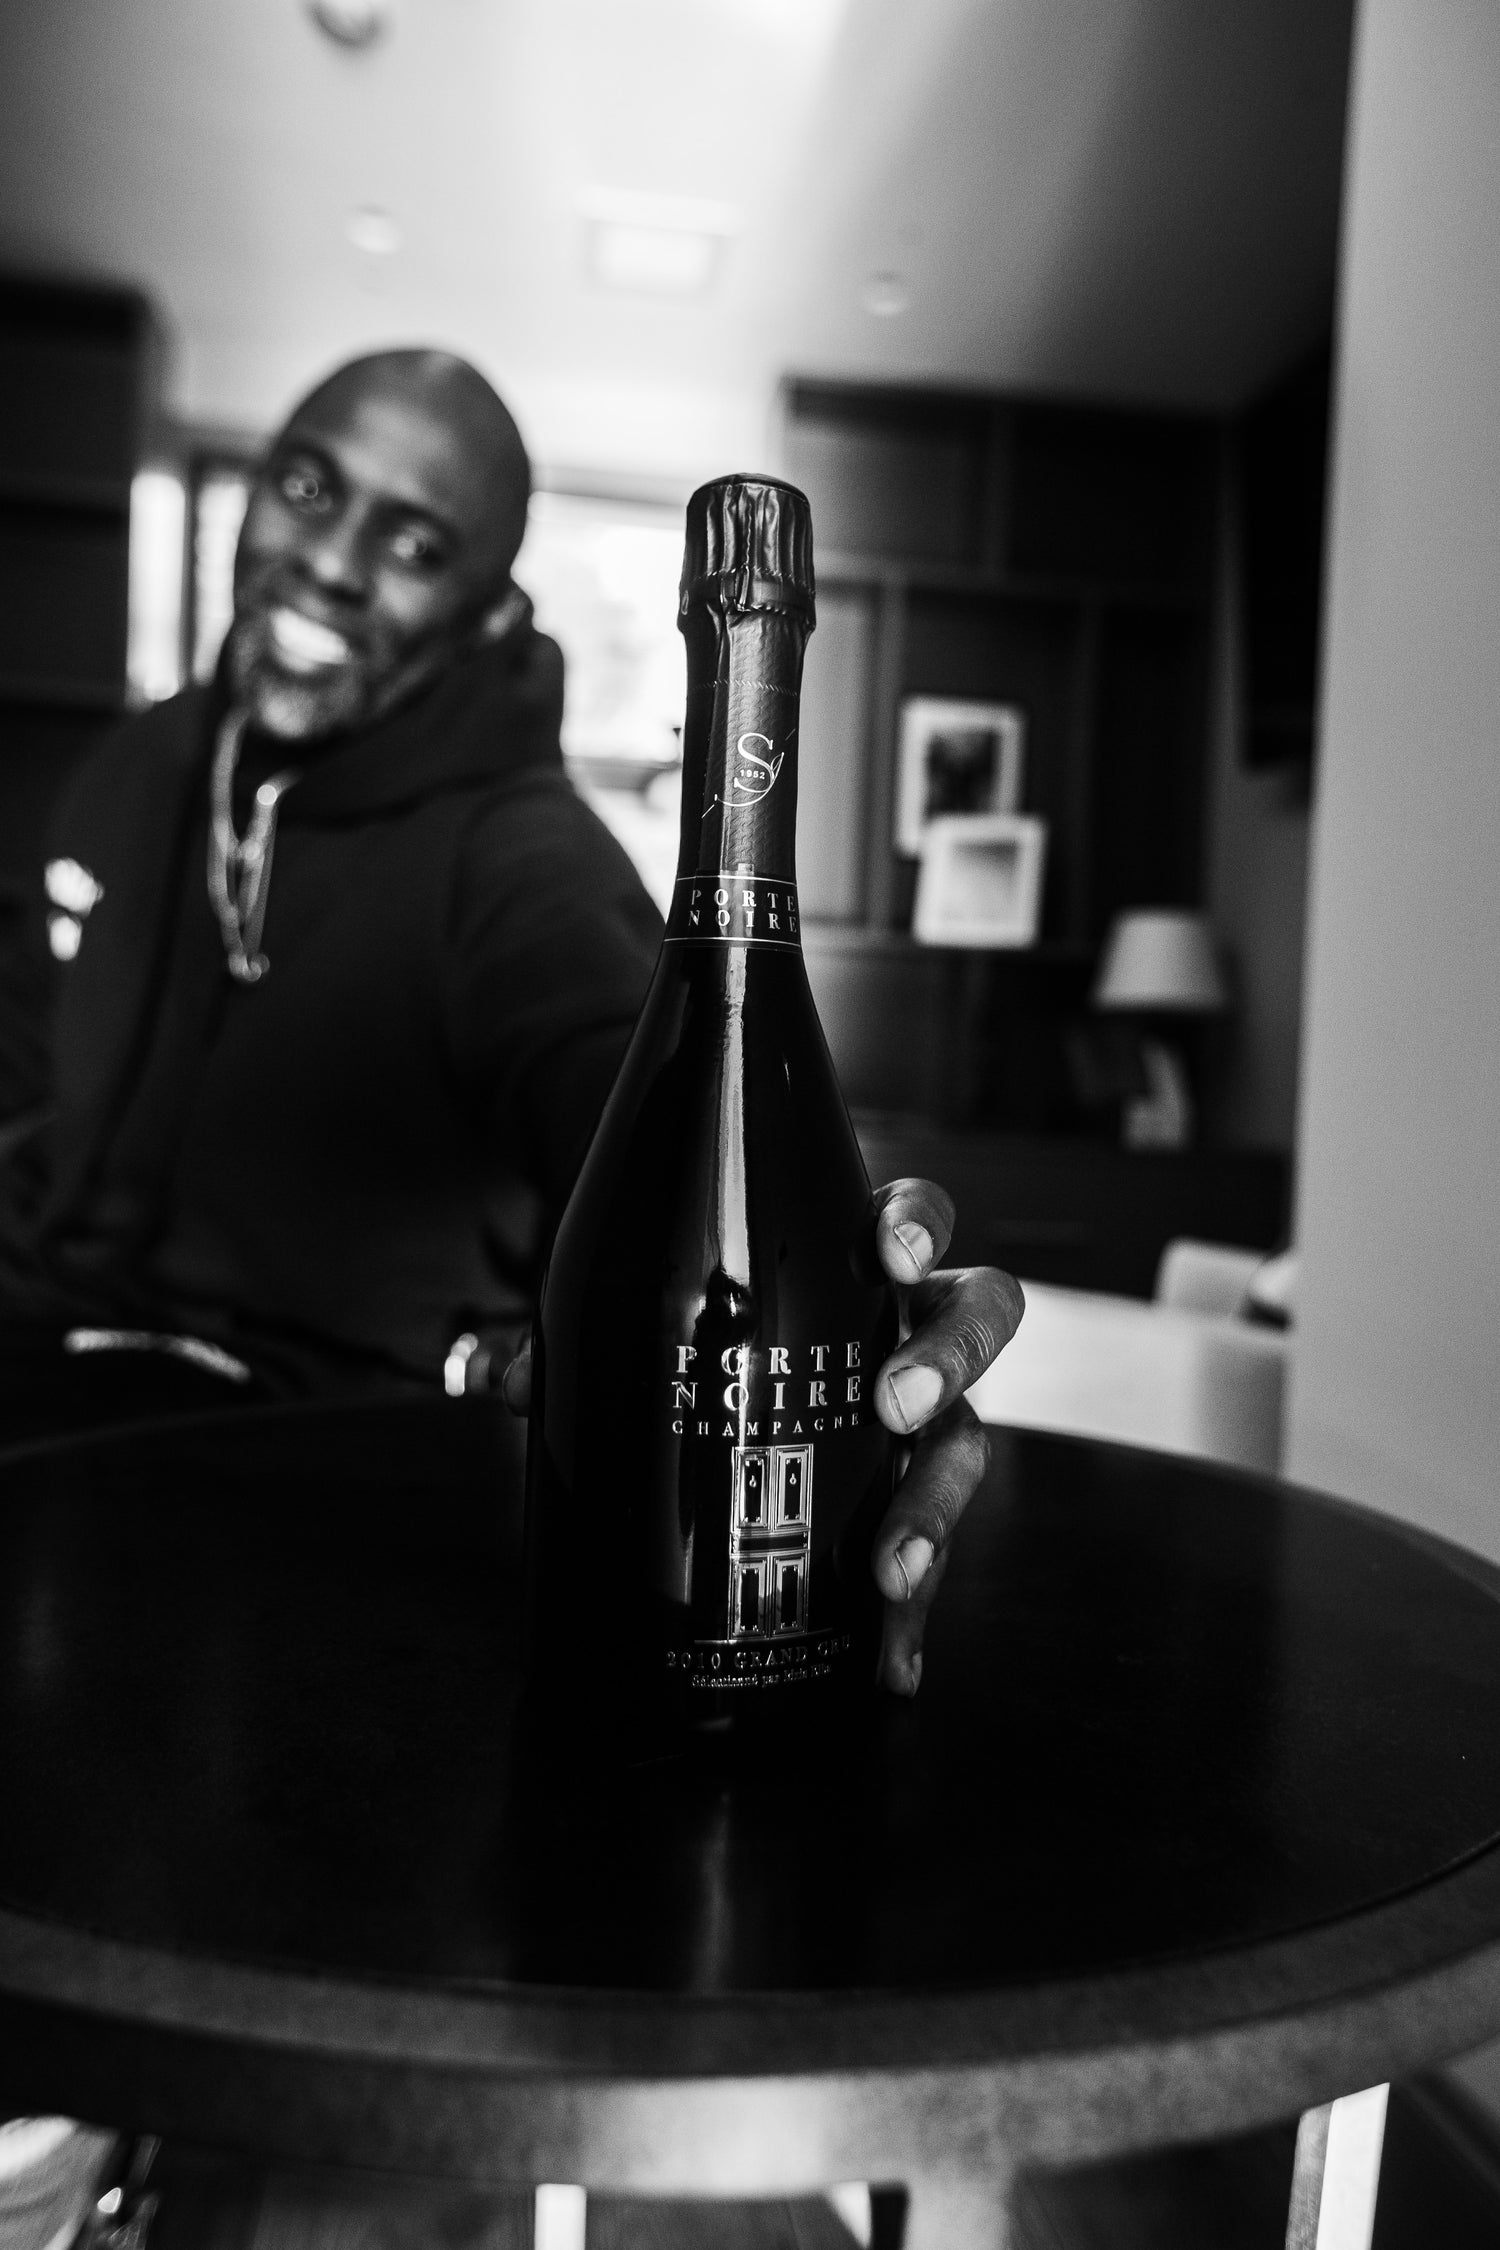 Idris Elba Champagne Collection - Porte Noire